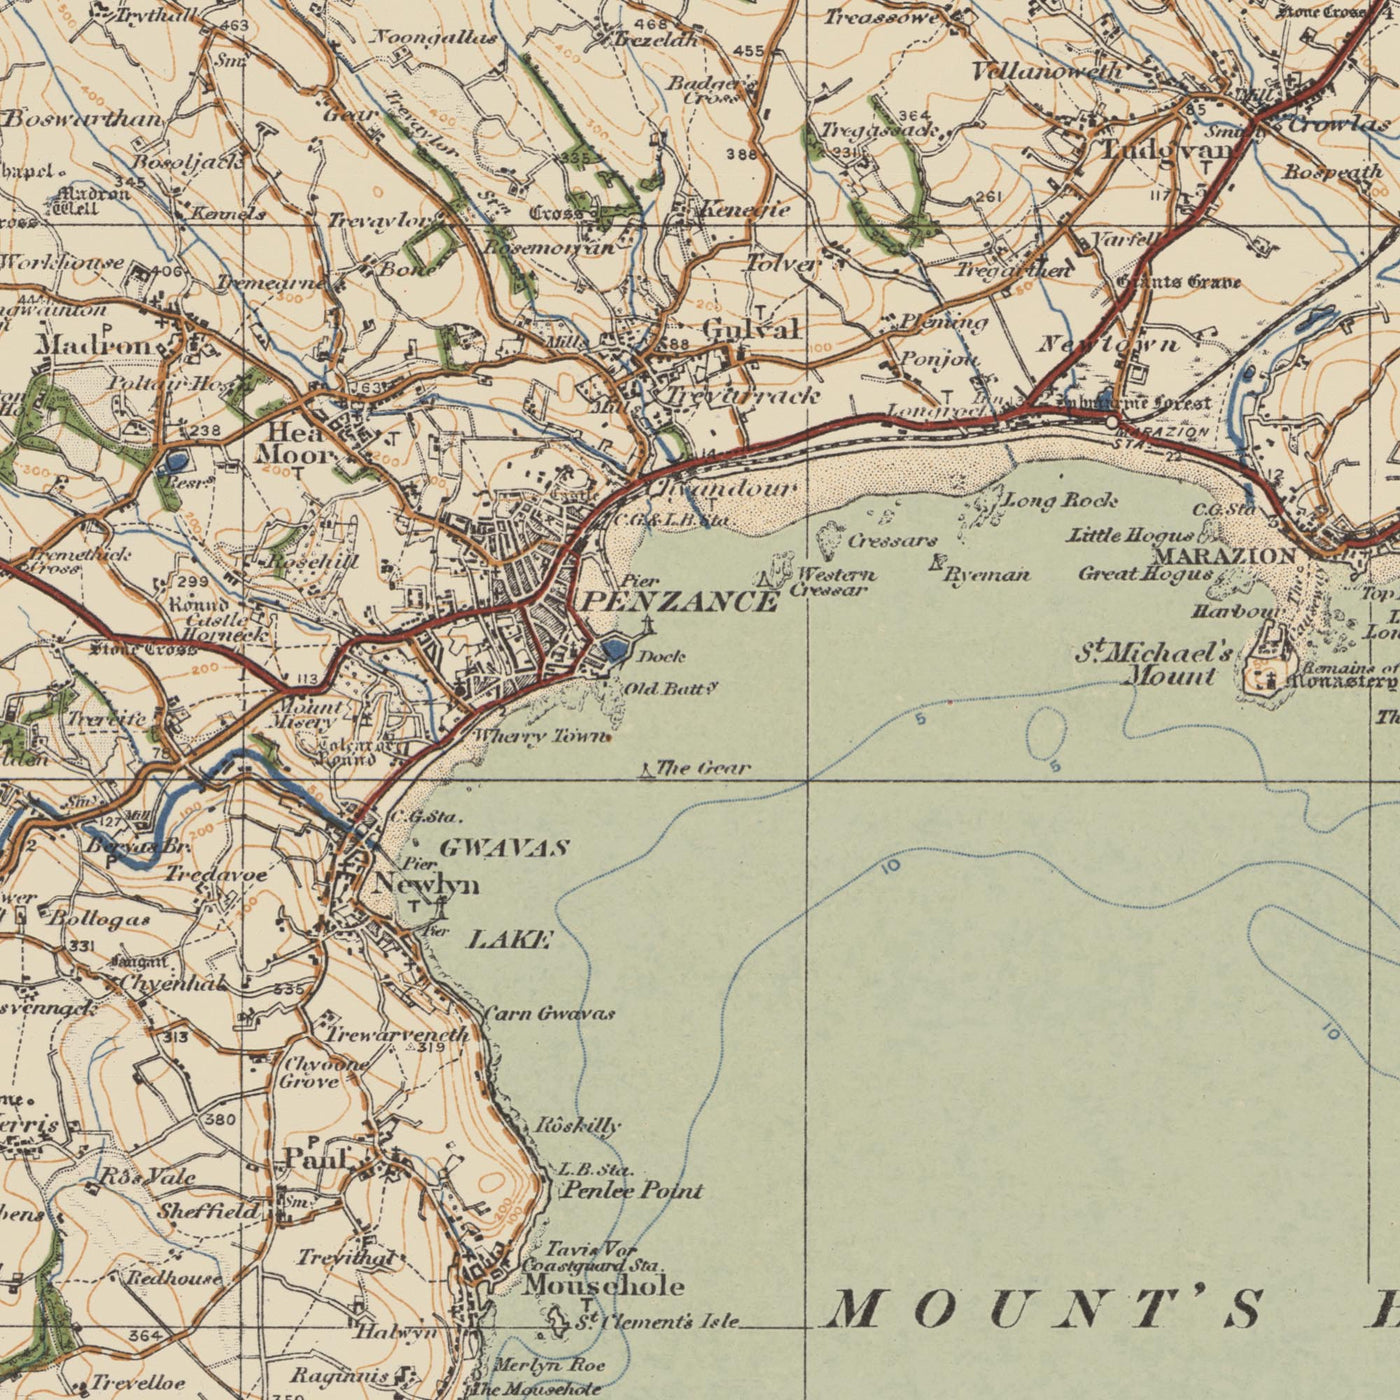 Old Ordnance Survey Map - Sheet 146 Lands End & Lizard, 1919-1926: Truro, Falmouth, St Ives, Penzance, Helston, St Michael's Mount, Lizard Point